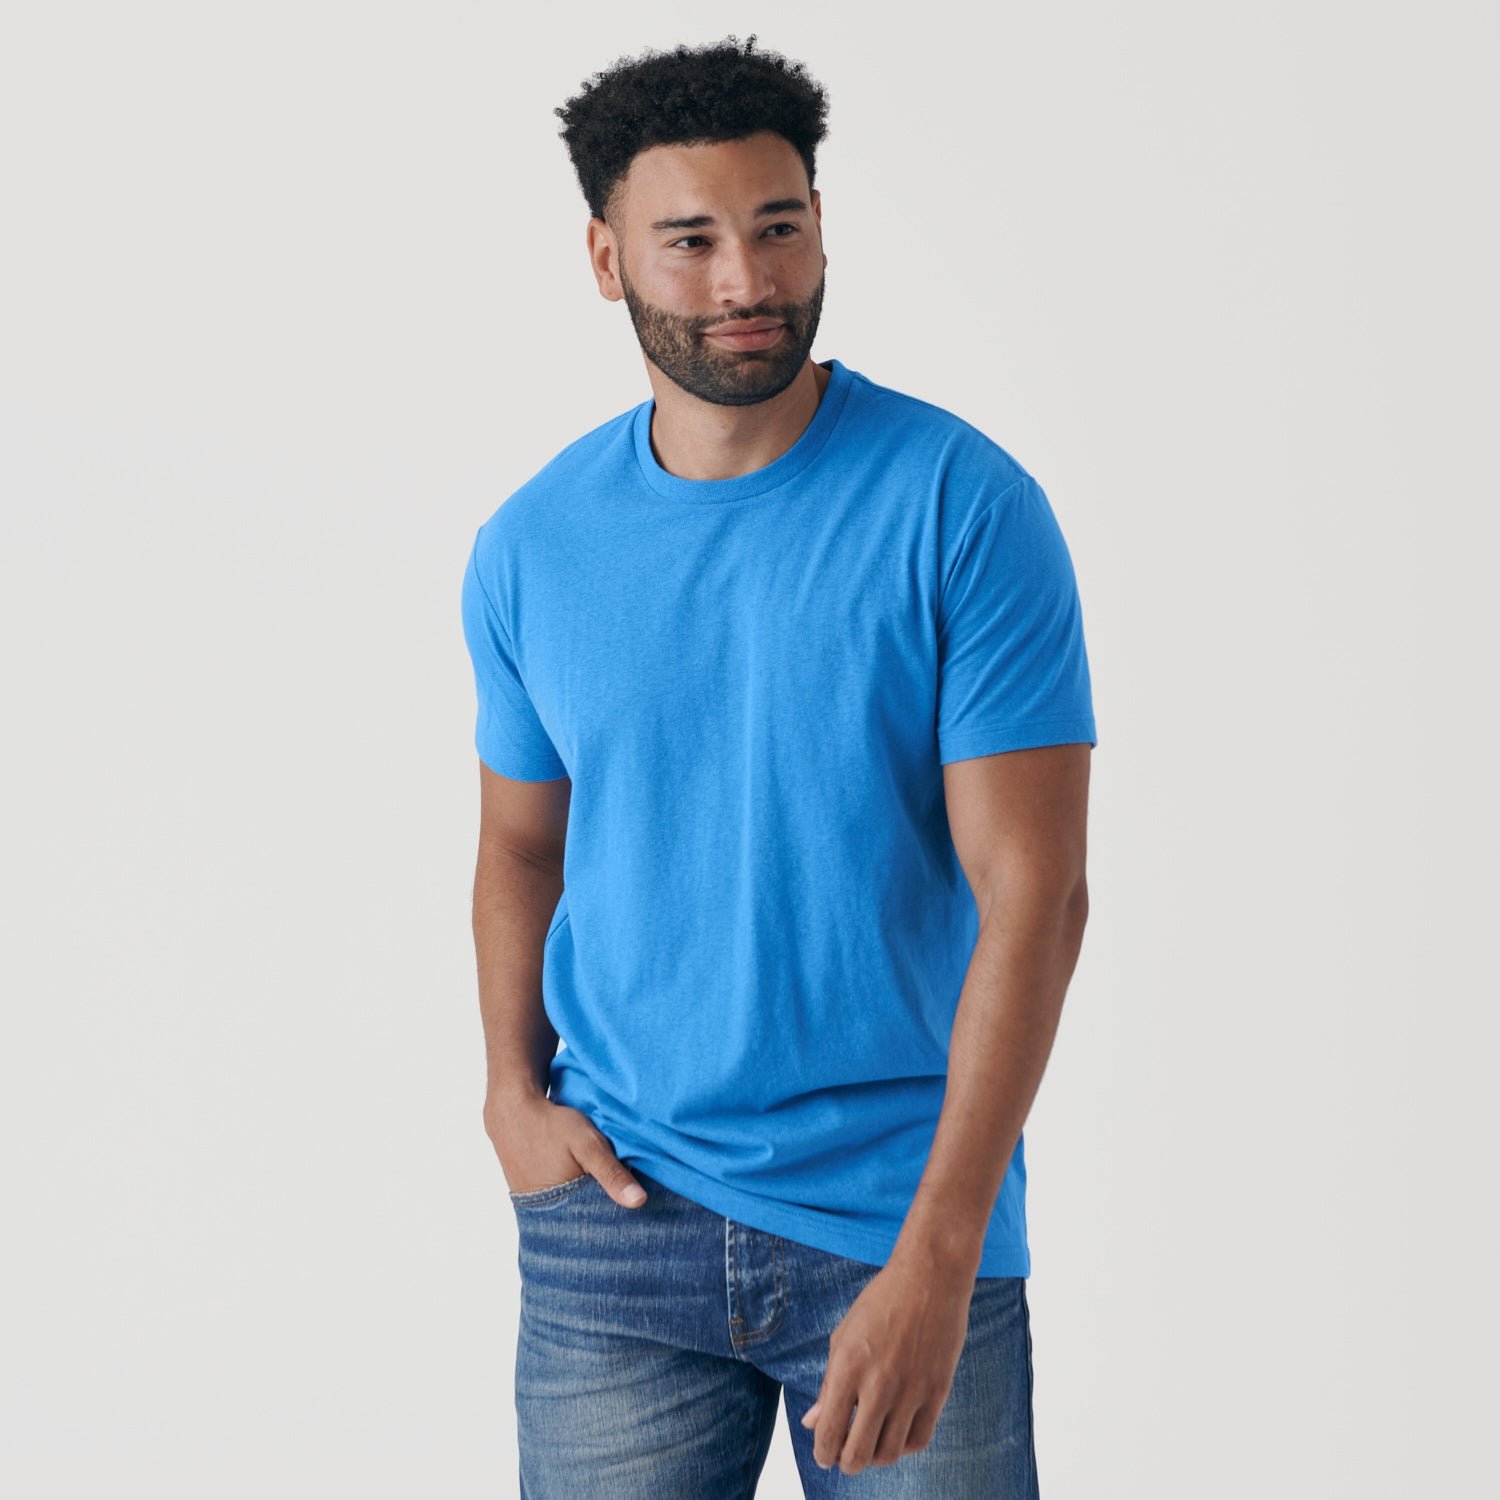 Periwinkle Blue Crew Neck T-Shirt